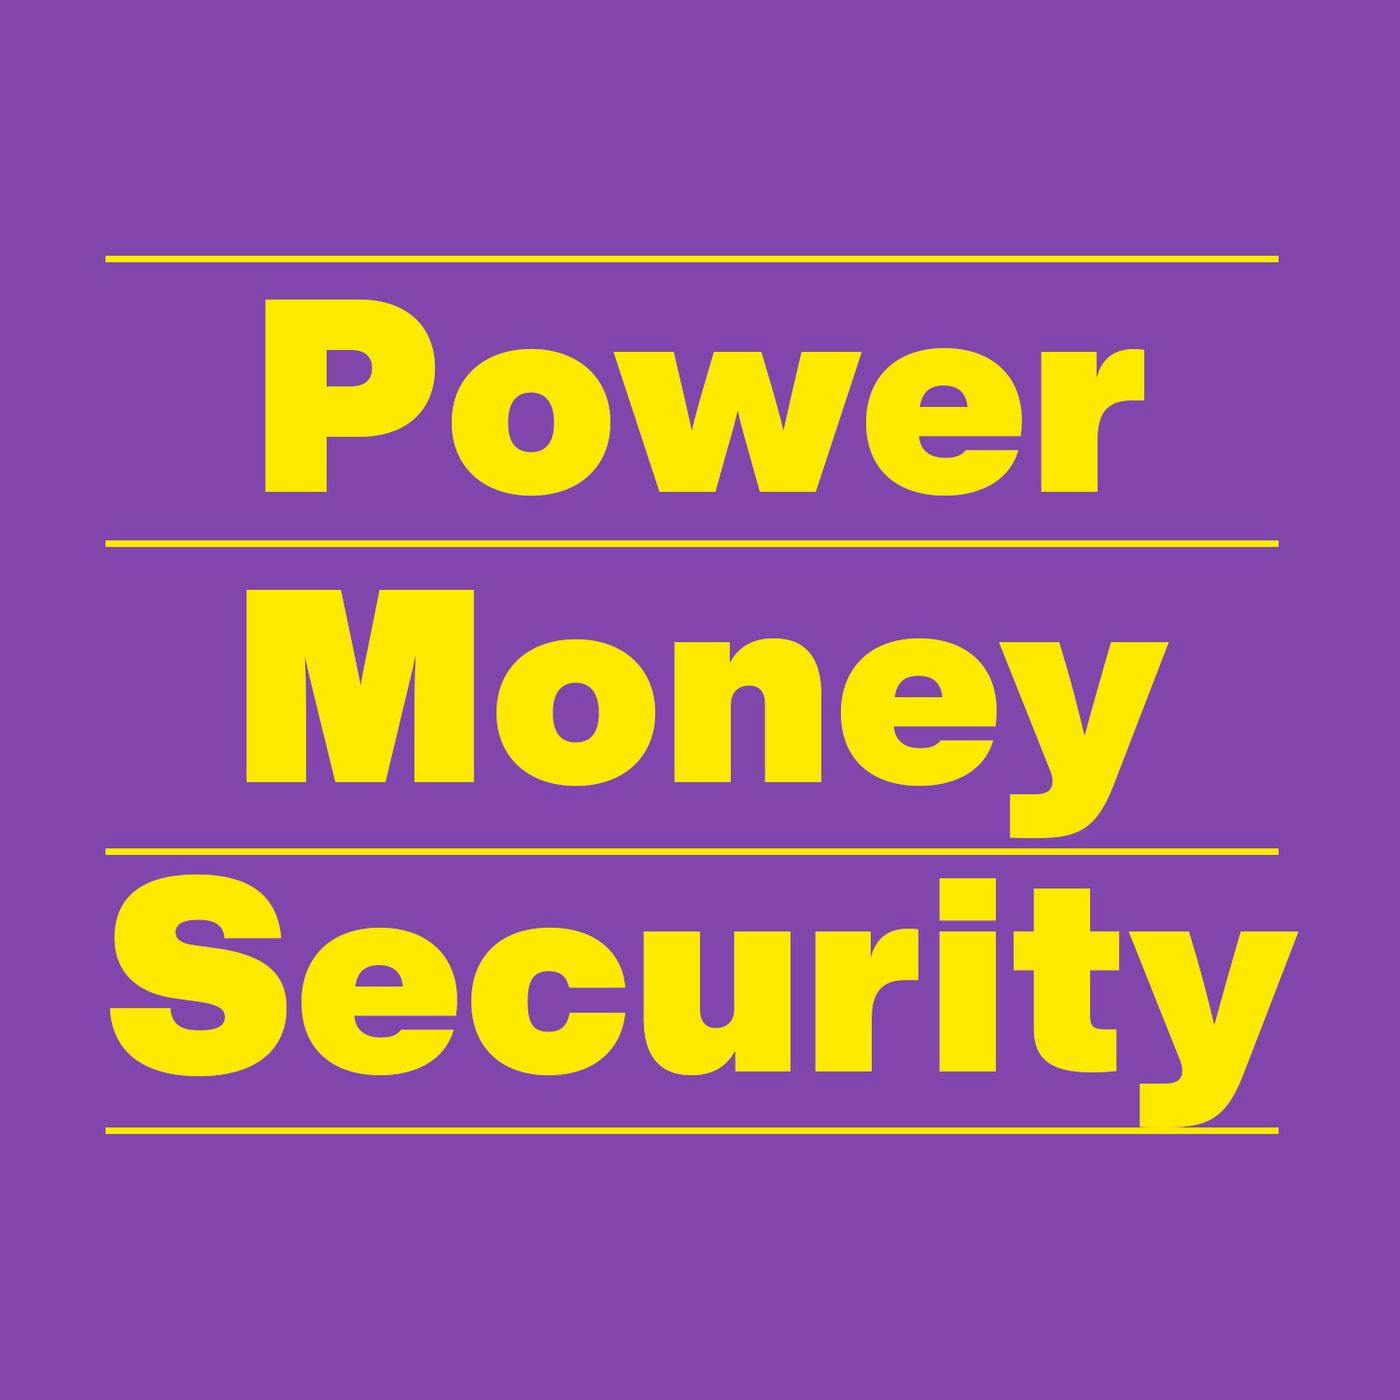 Trailer - Power, Money, Security